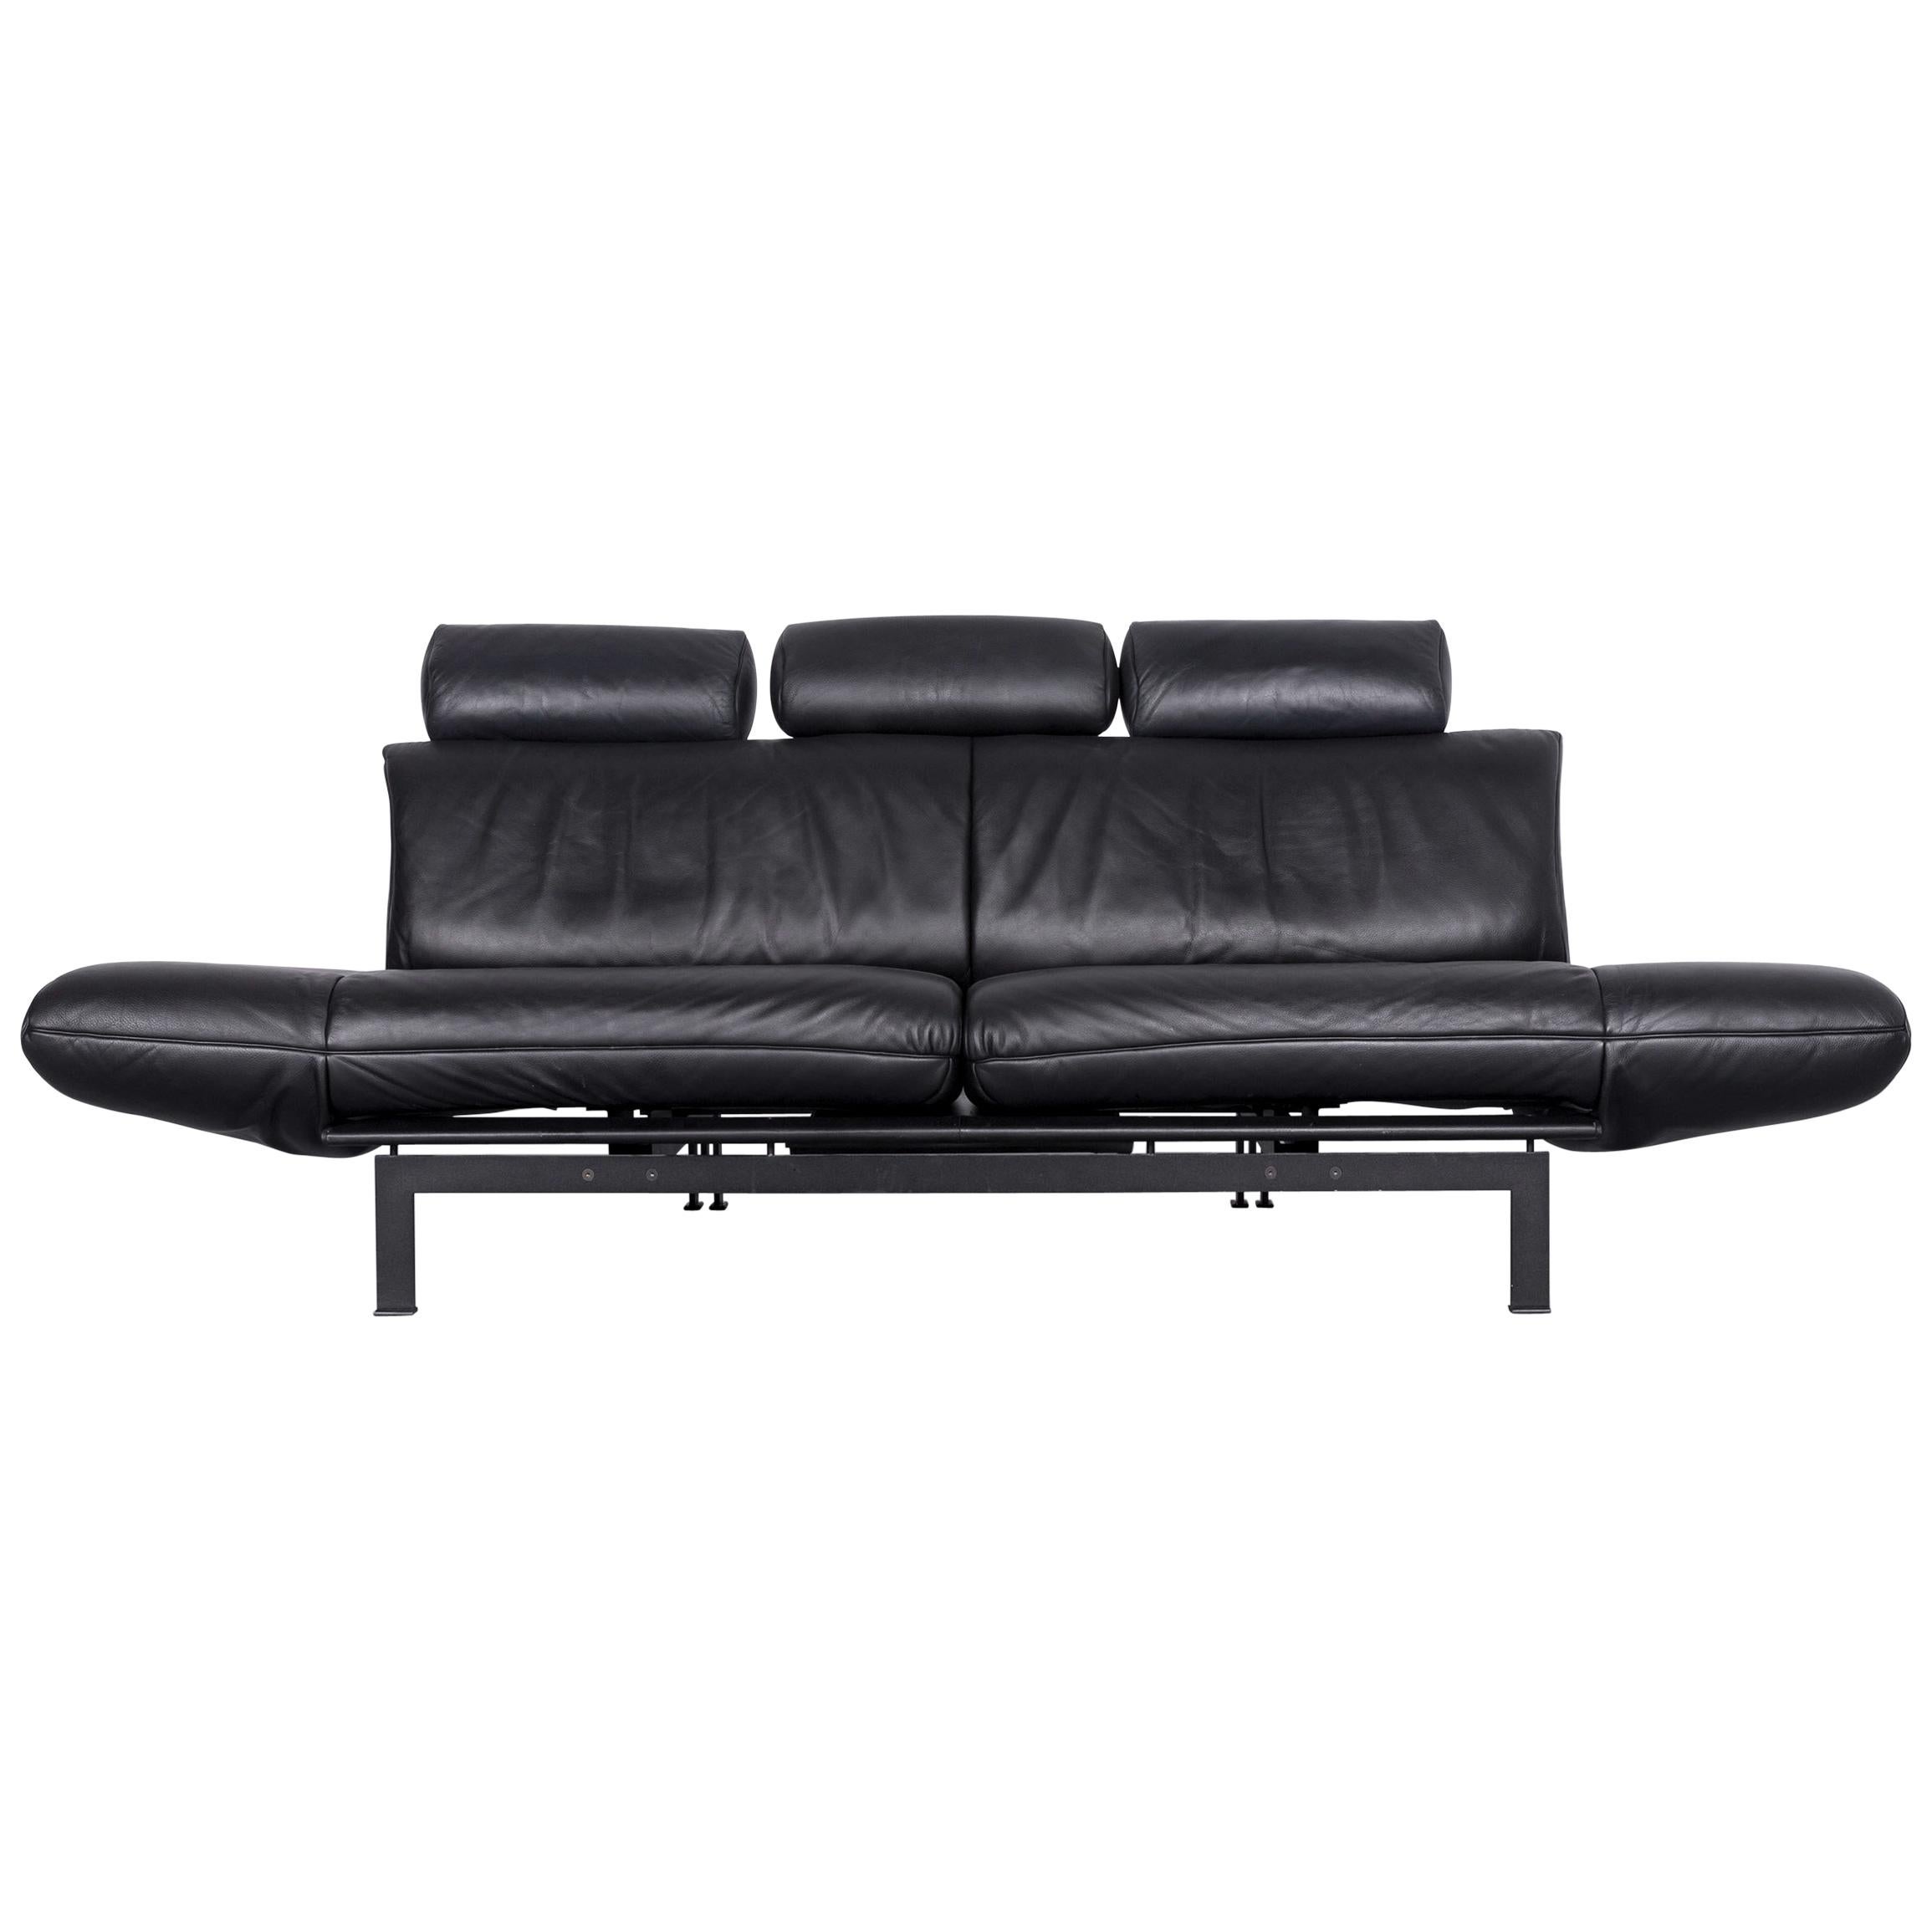 De Sede Ds 140 Designer Leather Sofa Black Three-Seat Function Modern For Sale